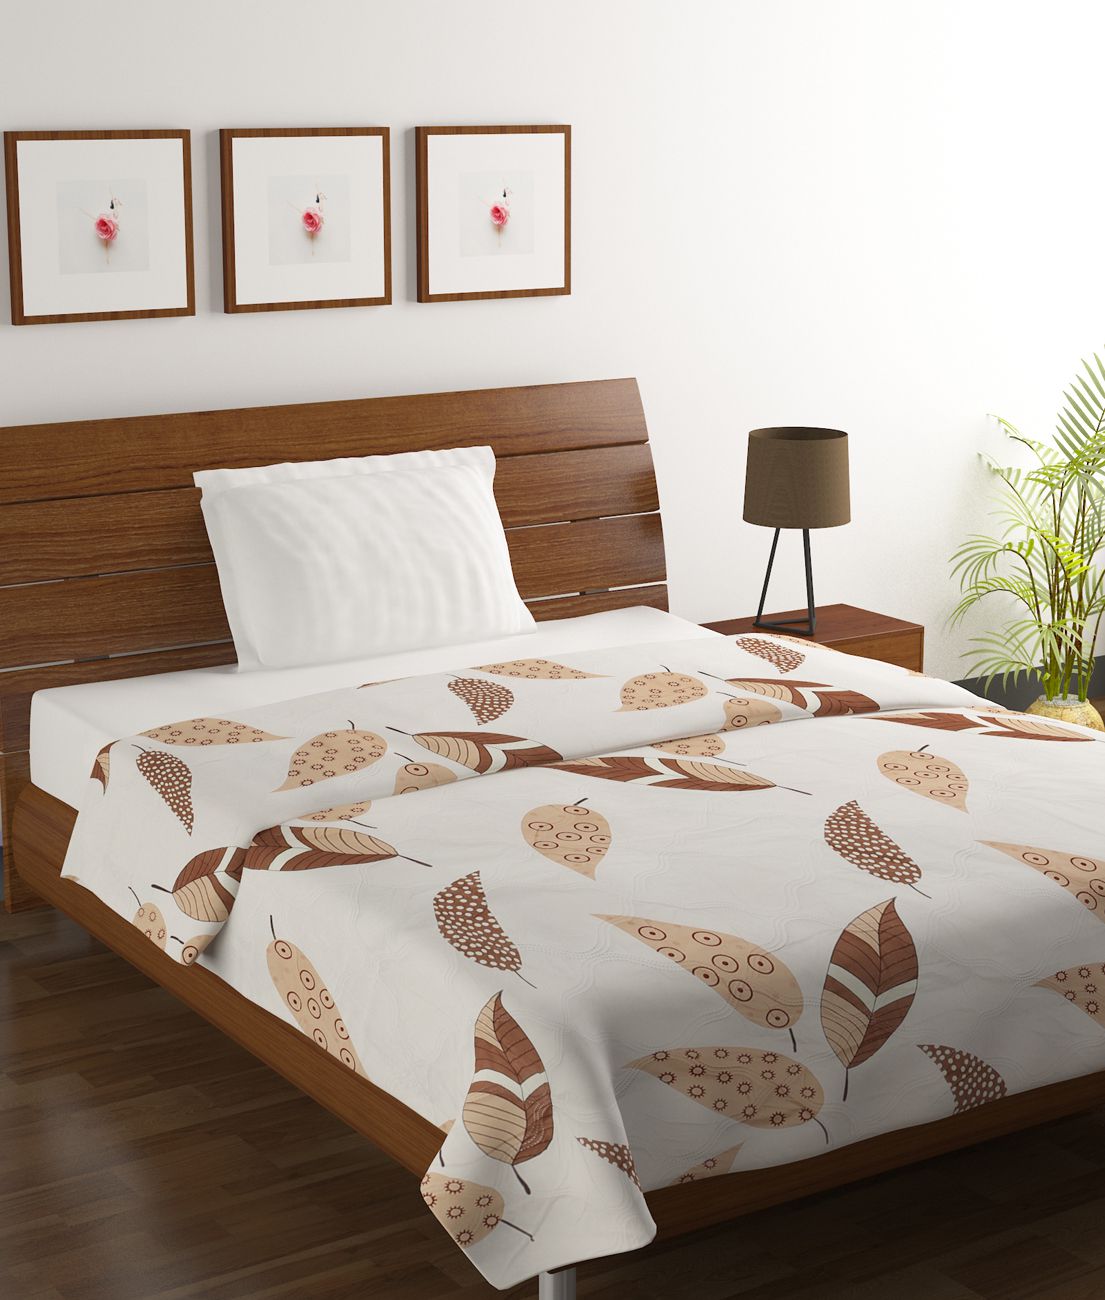     			HOMETALES Microfiber Floral Print Single Comforter ( 150 x 210 cm ) Pack of 1 - Beige